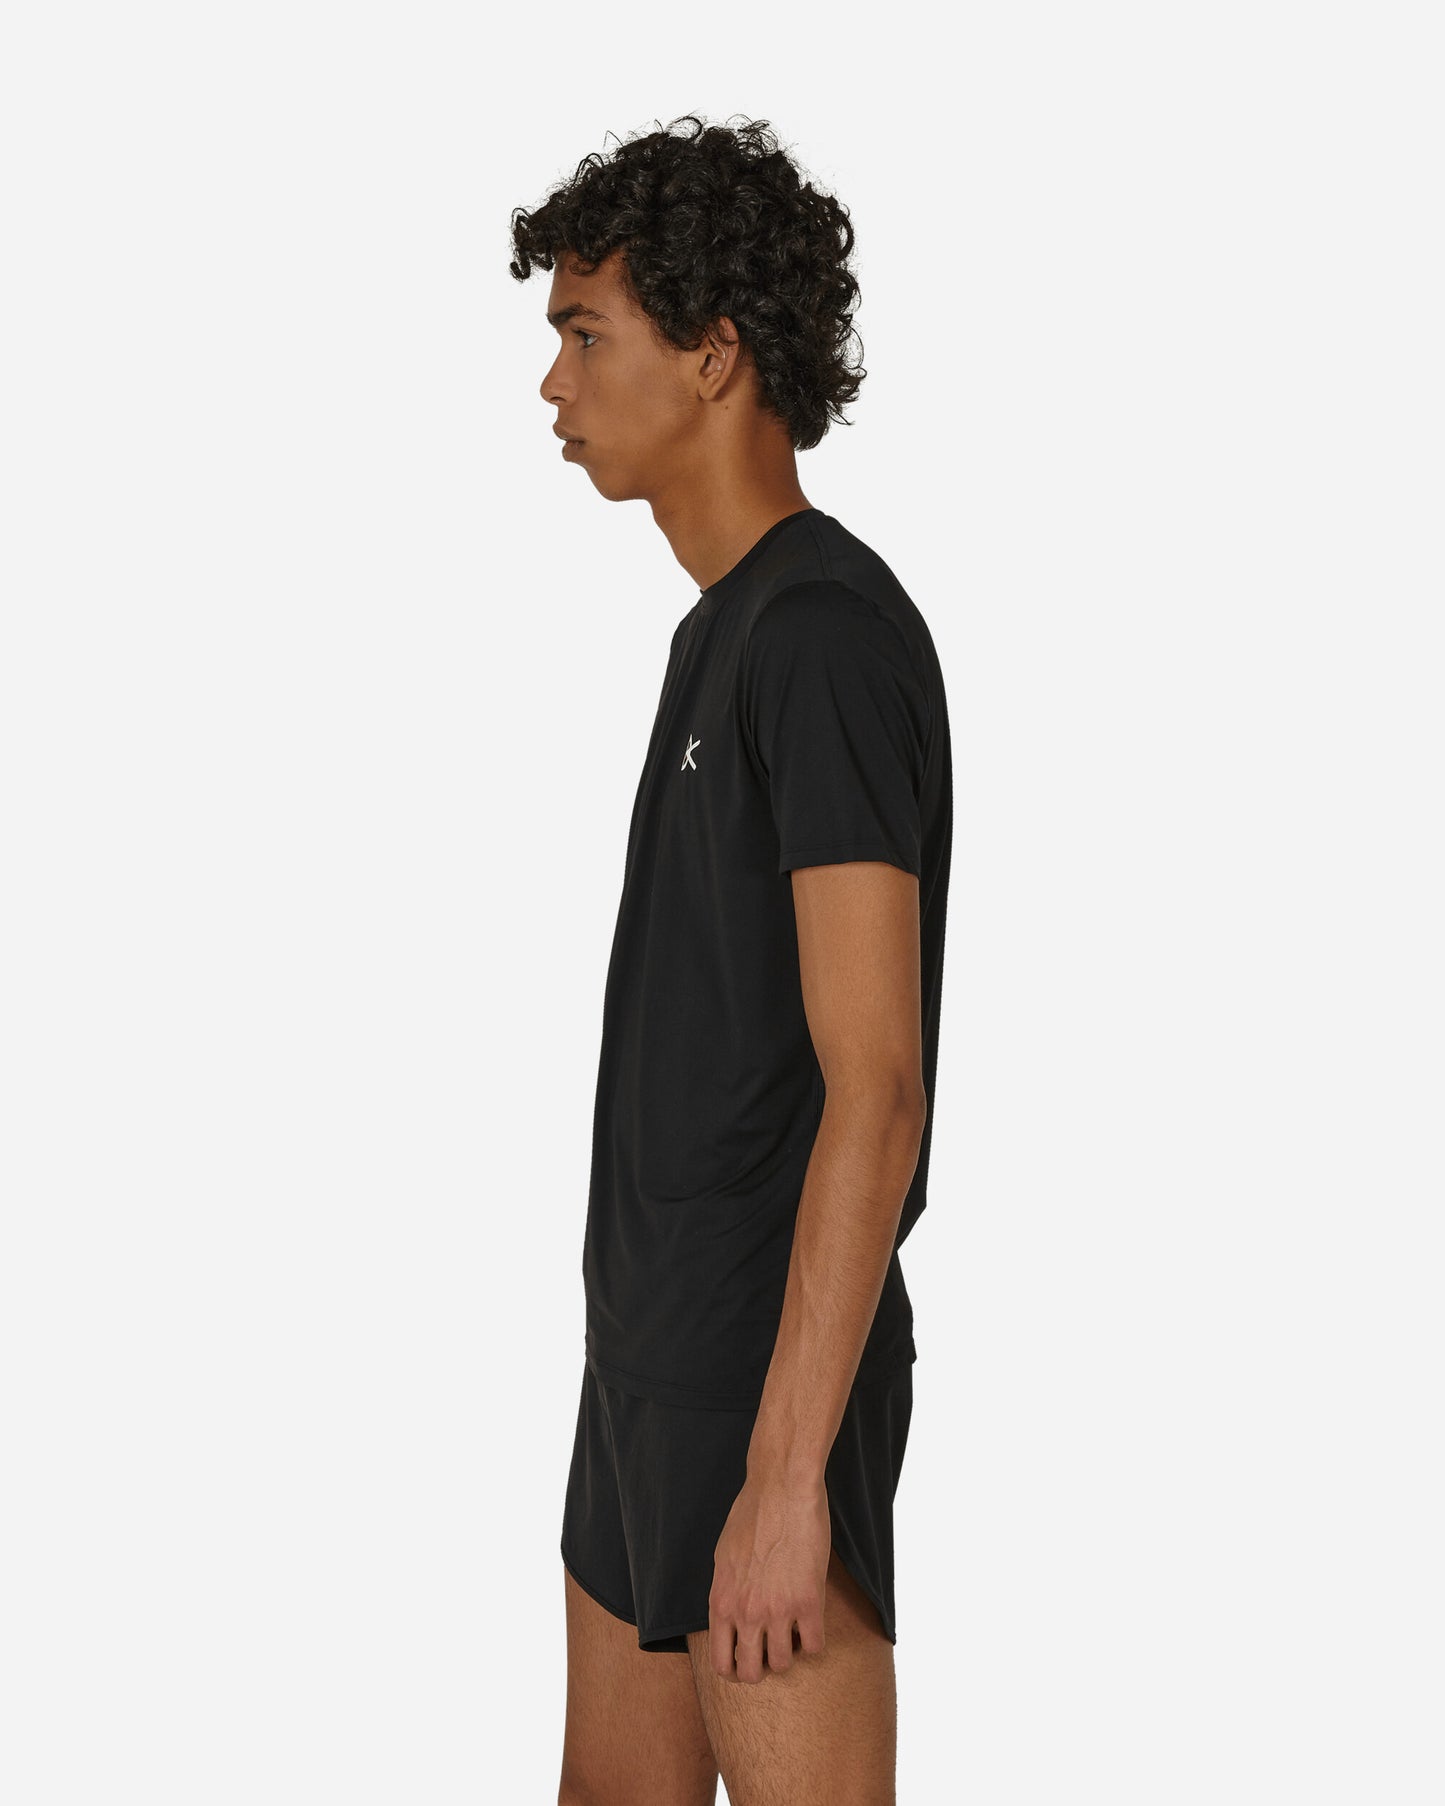 District Vision Ultralight Aloe Short Sleeve Tee Black T-Shirts Shortsleeve DV0018 B